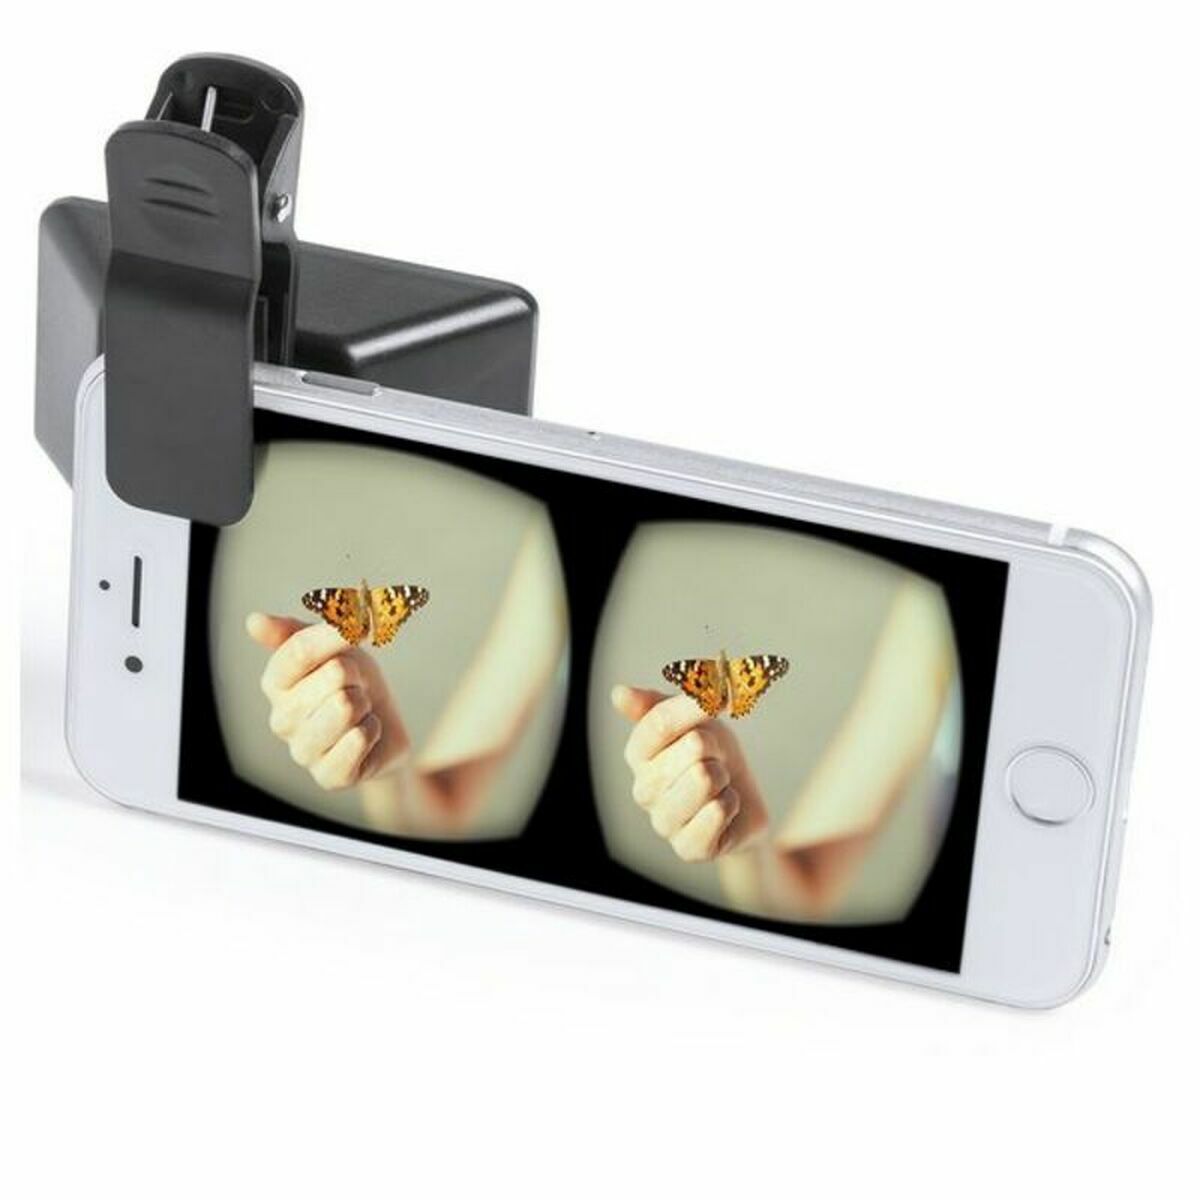 3D Lens for Smartphone Camera 145633 (50 Units)